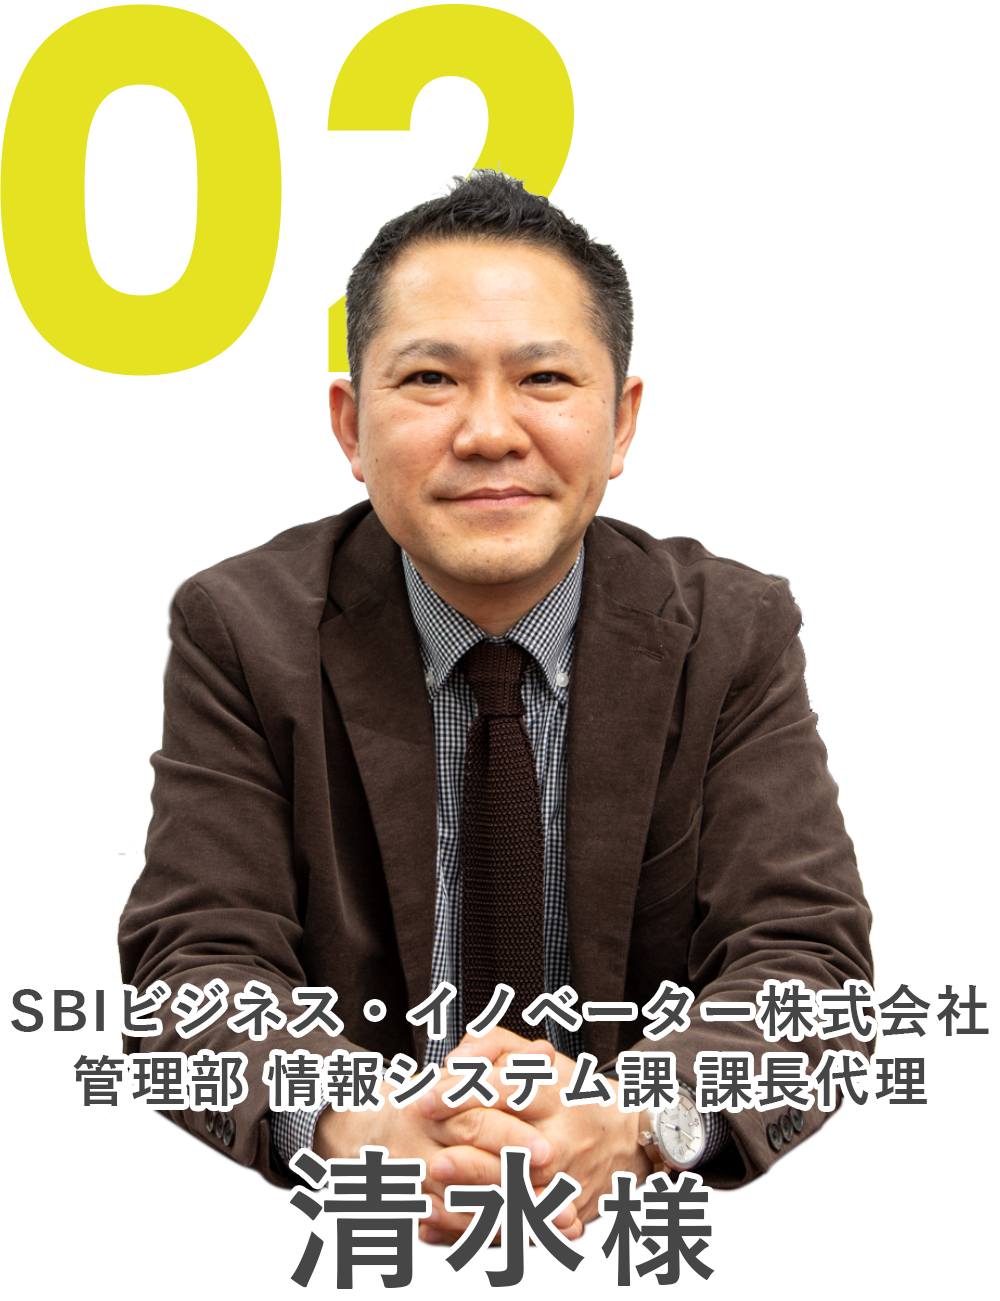 SBIビジネス・イノベーター株式会社 鈴木様 プロフィール